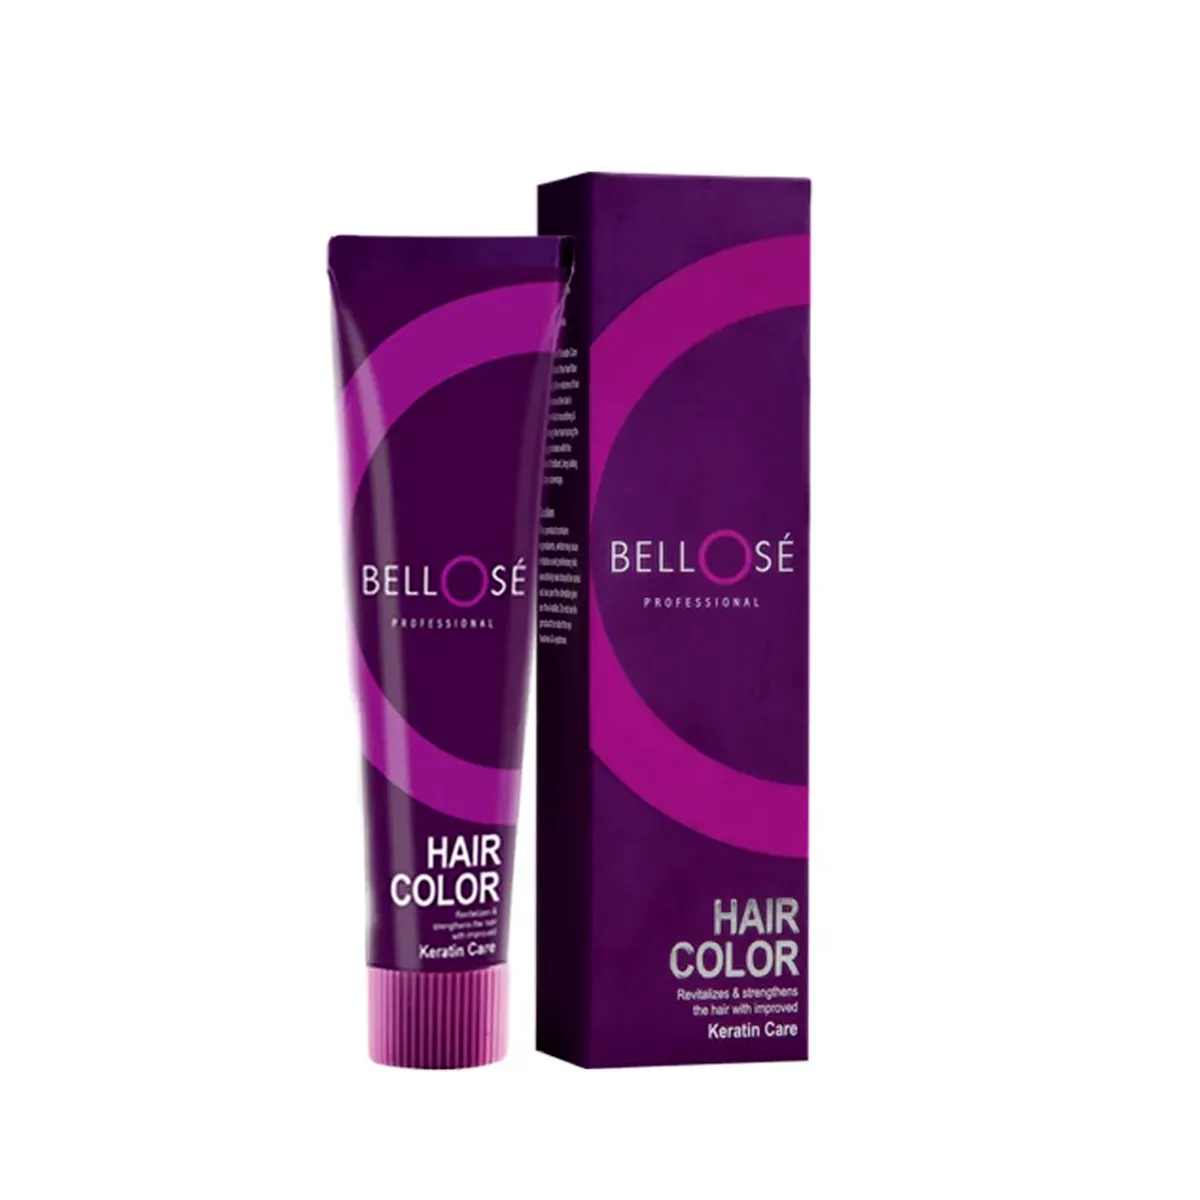 Bellose Hair Color 1.0 60ml